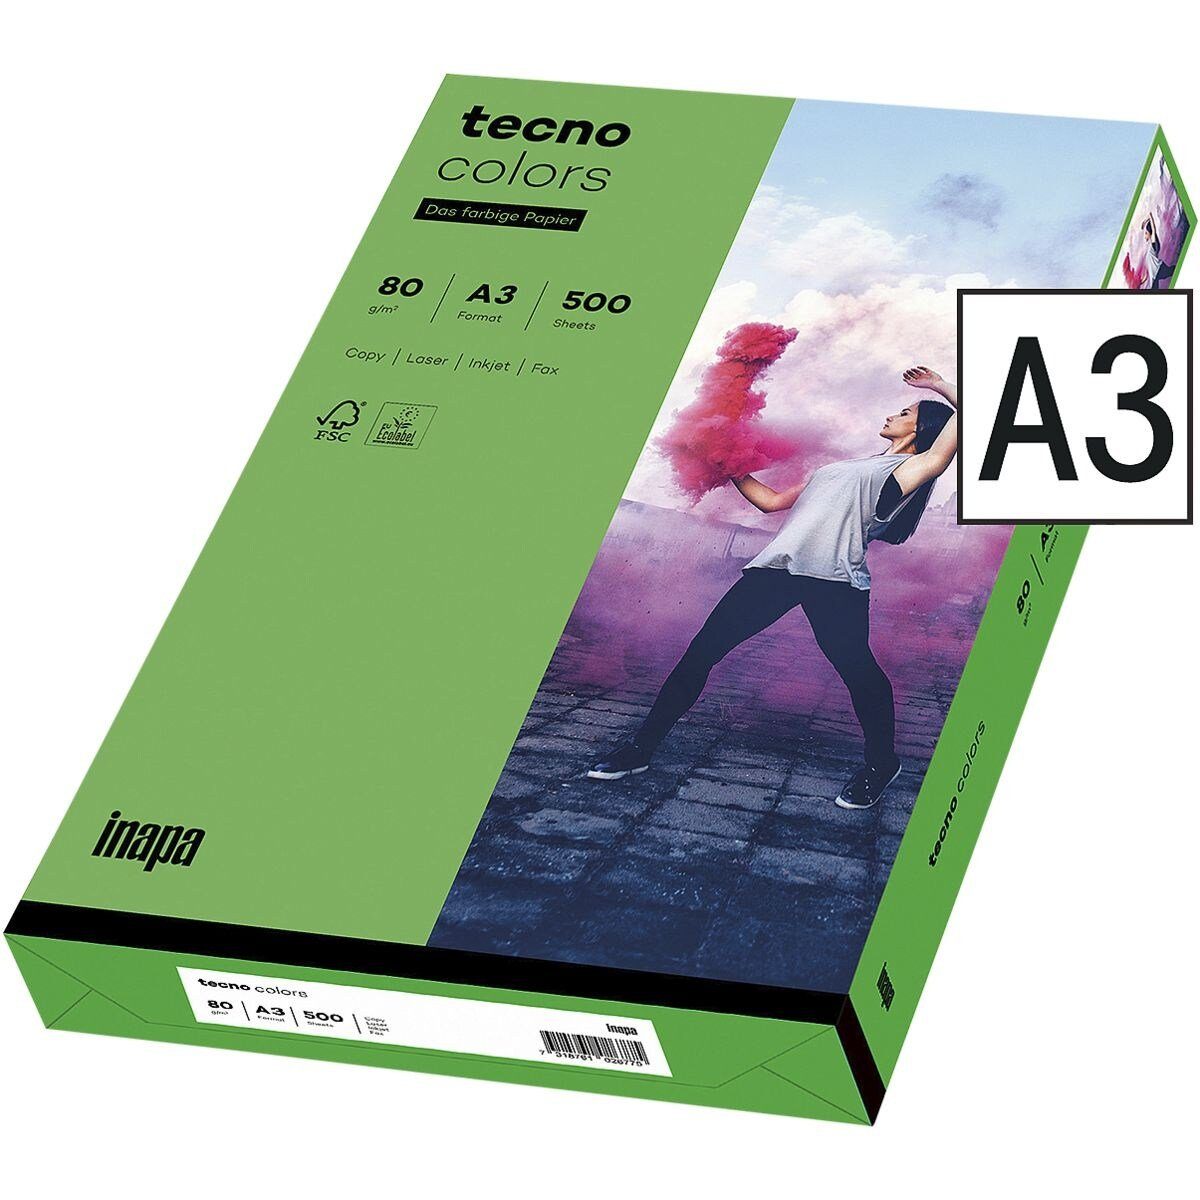 Colors, intensivgrün und Inapa g/m², tecno 80 Blatt Format A3, / Kopierpapier DIN 500 Intensivfarben, Drucker- Rainbow tecno